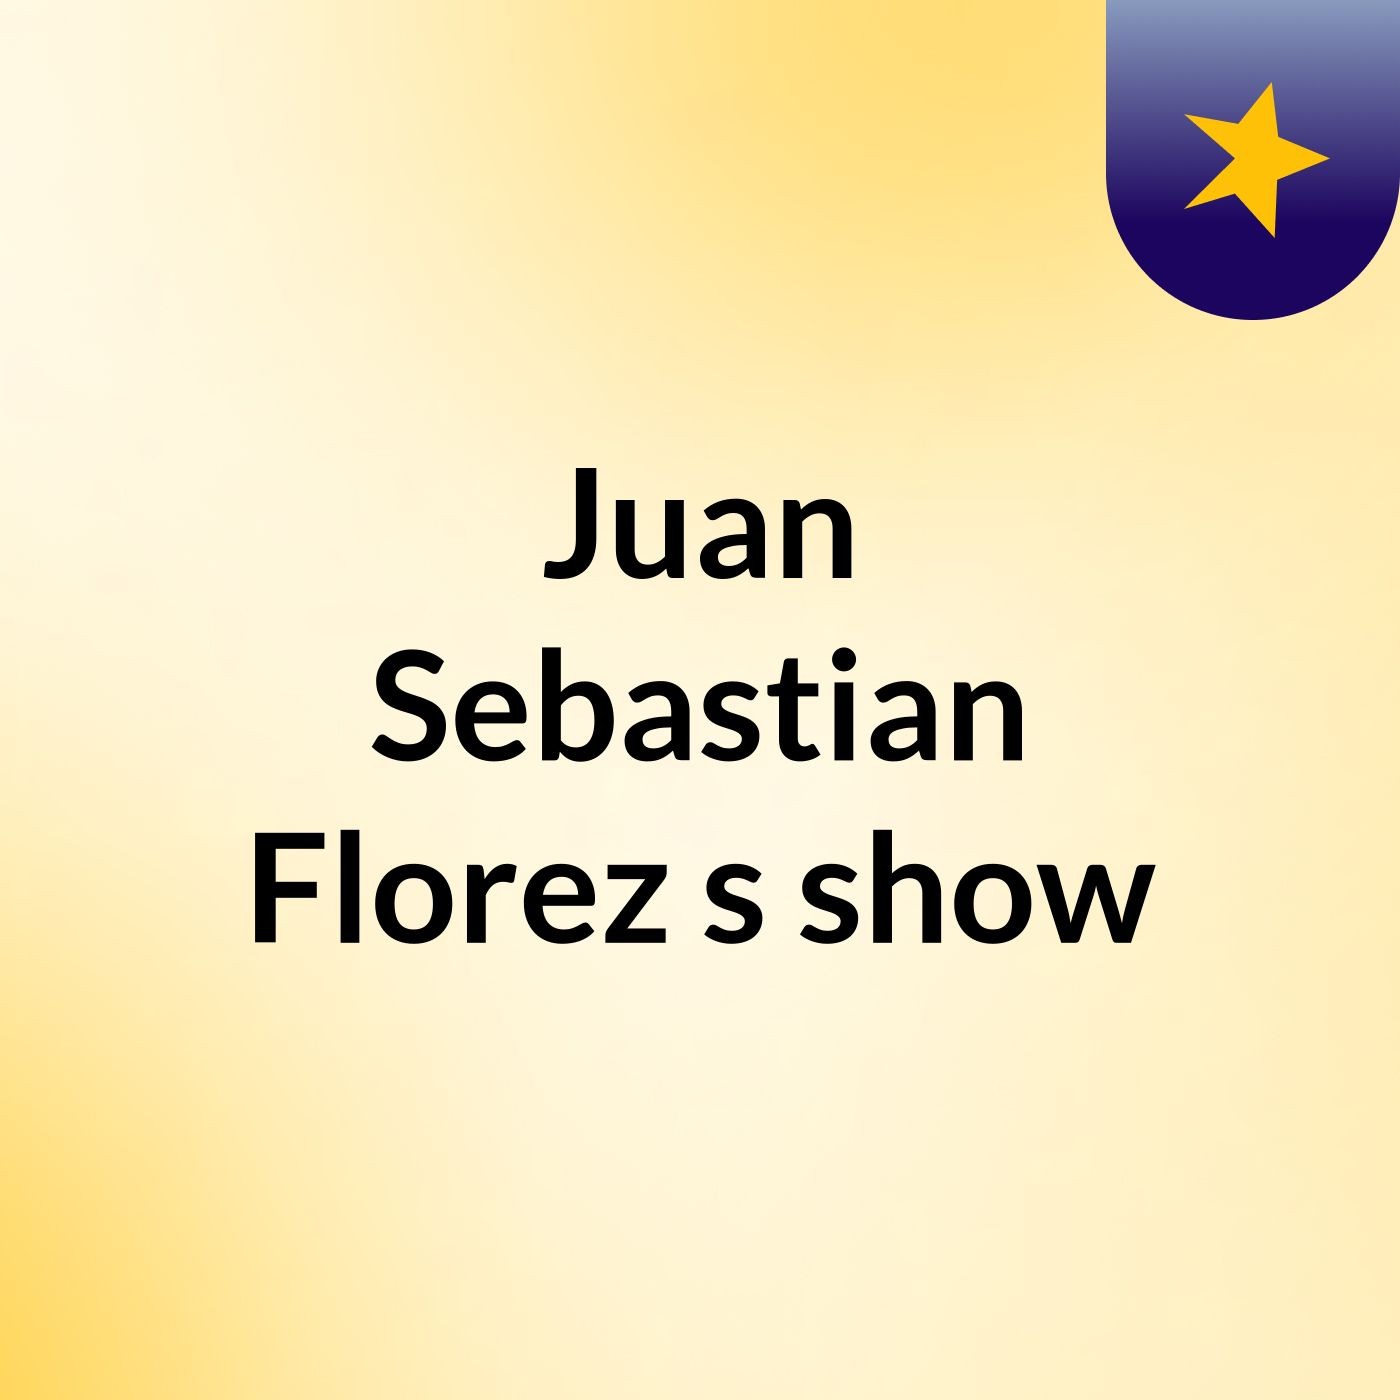 Juan Sebastian Florez's show